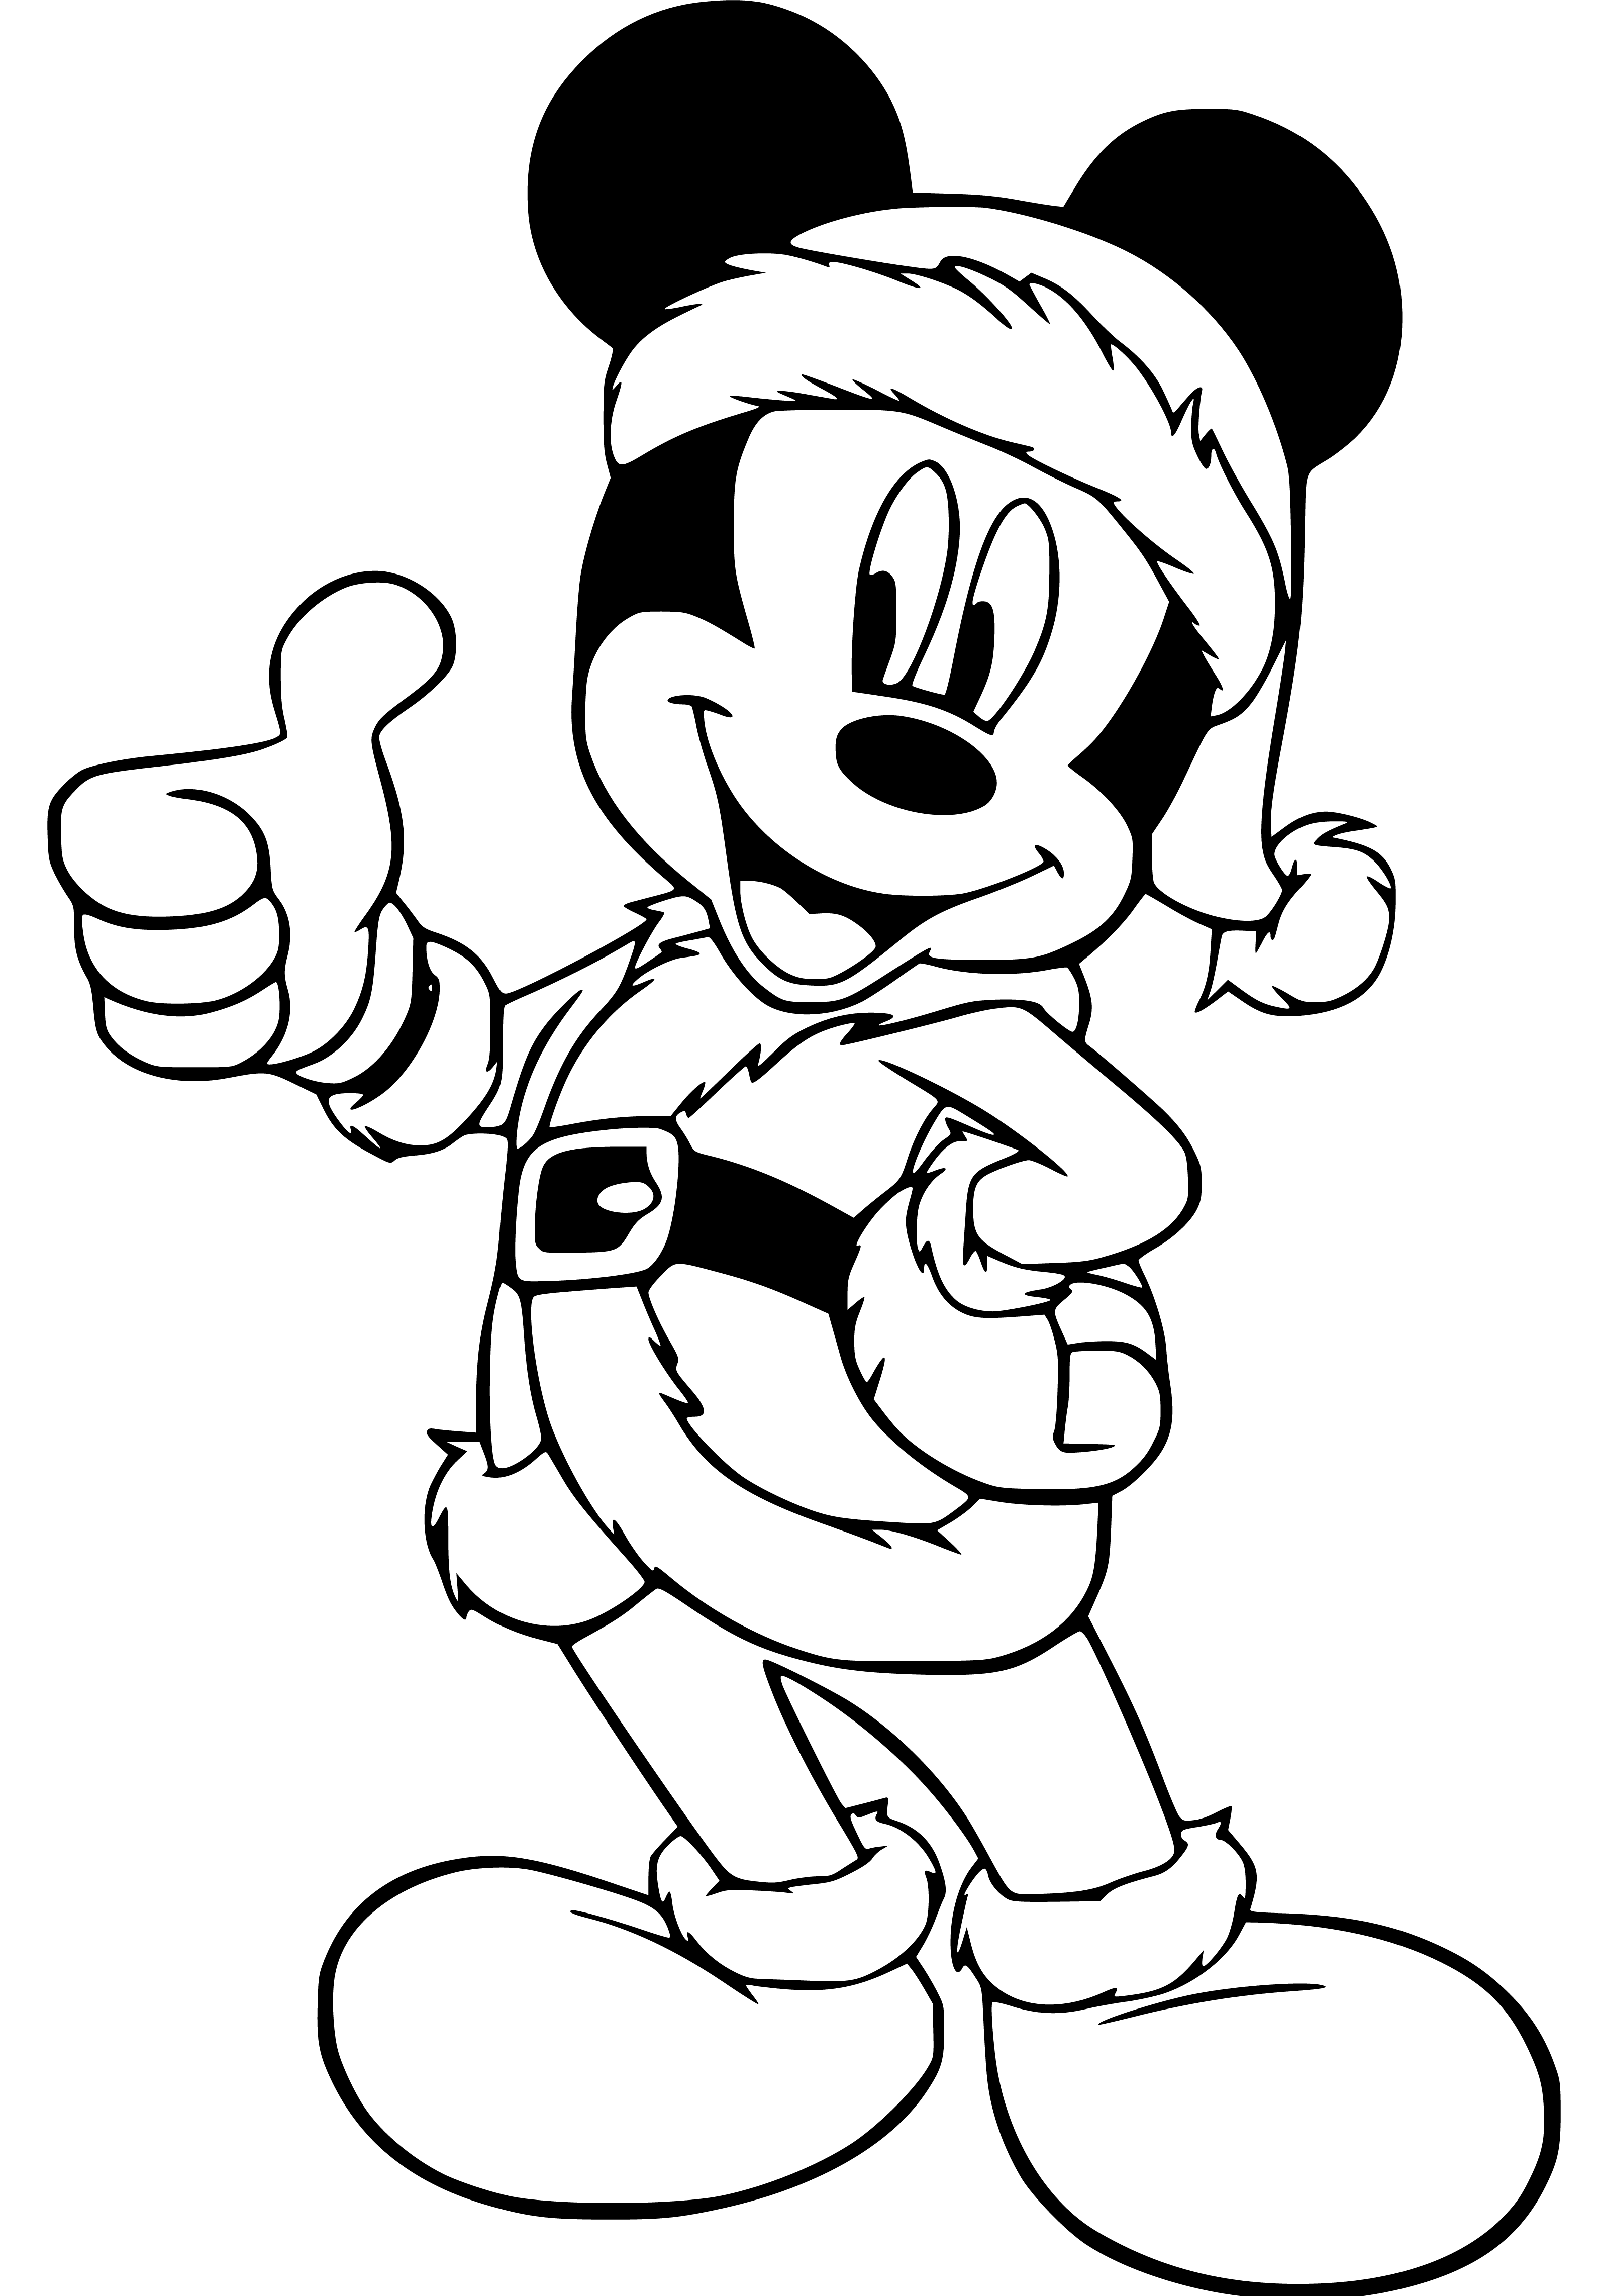 Mickey Mouse Coloring Page - SheetalColor.com